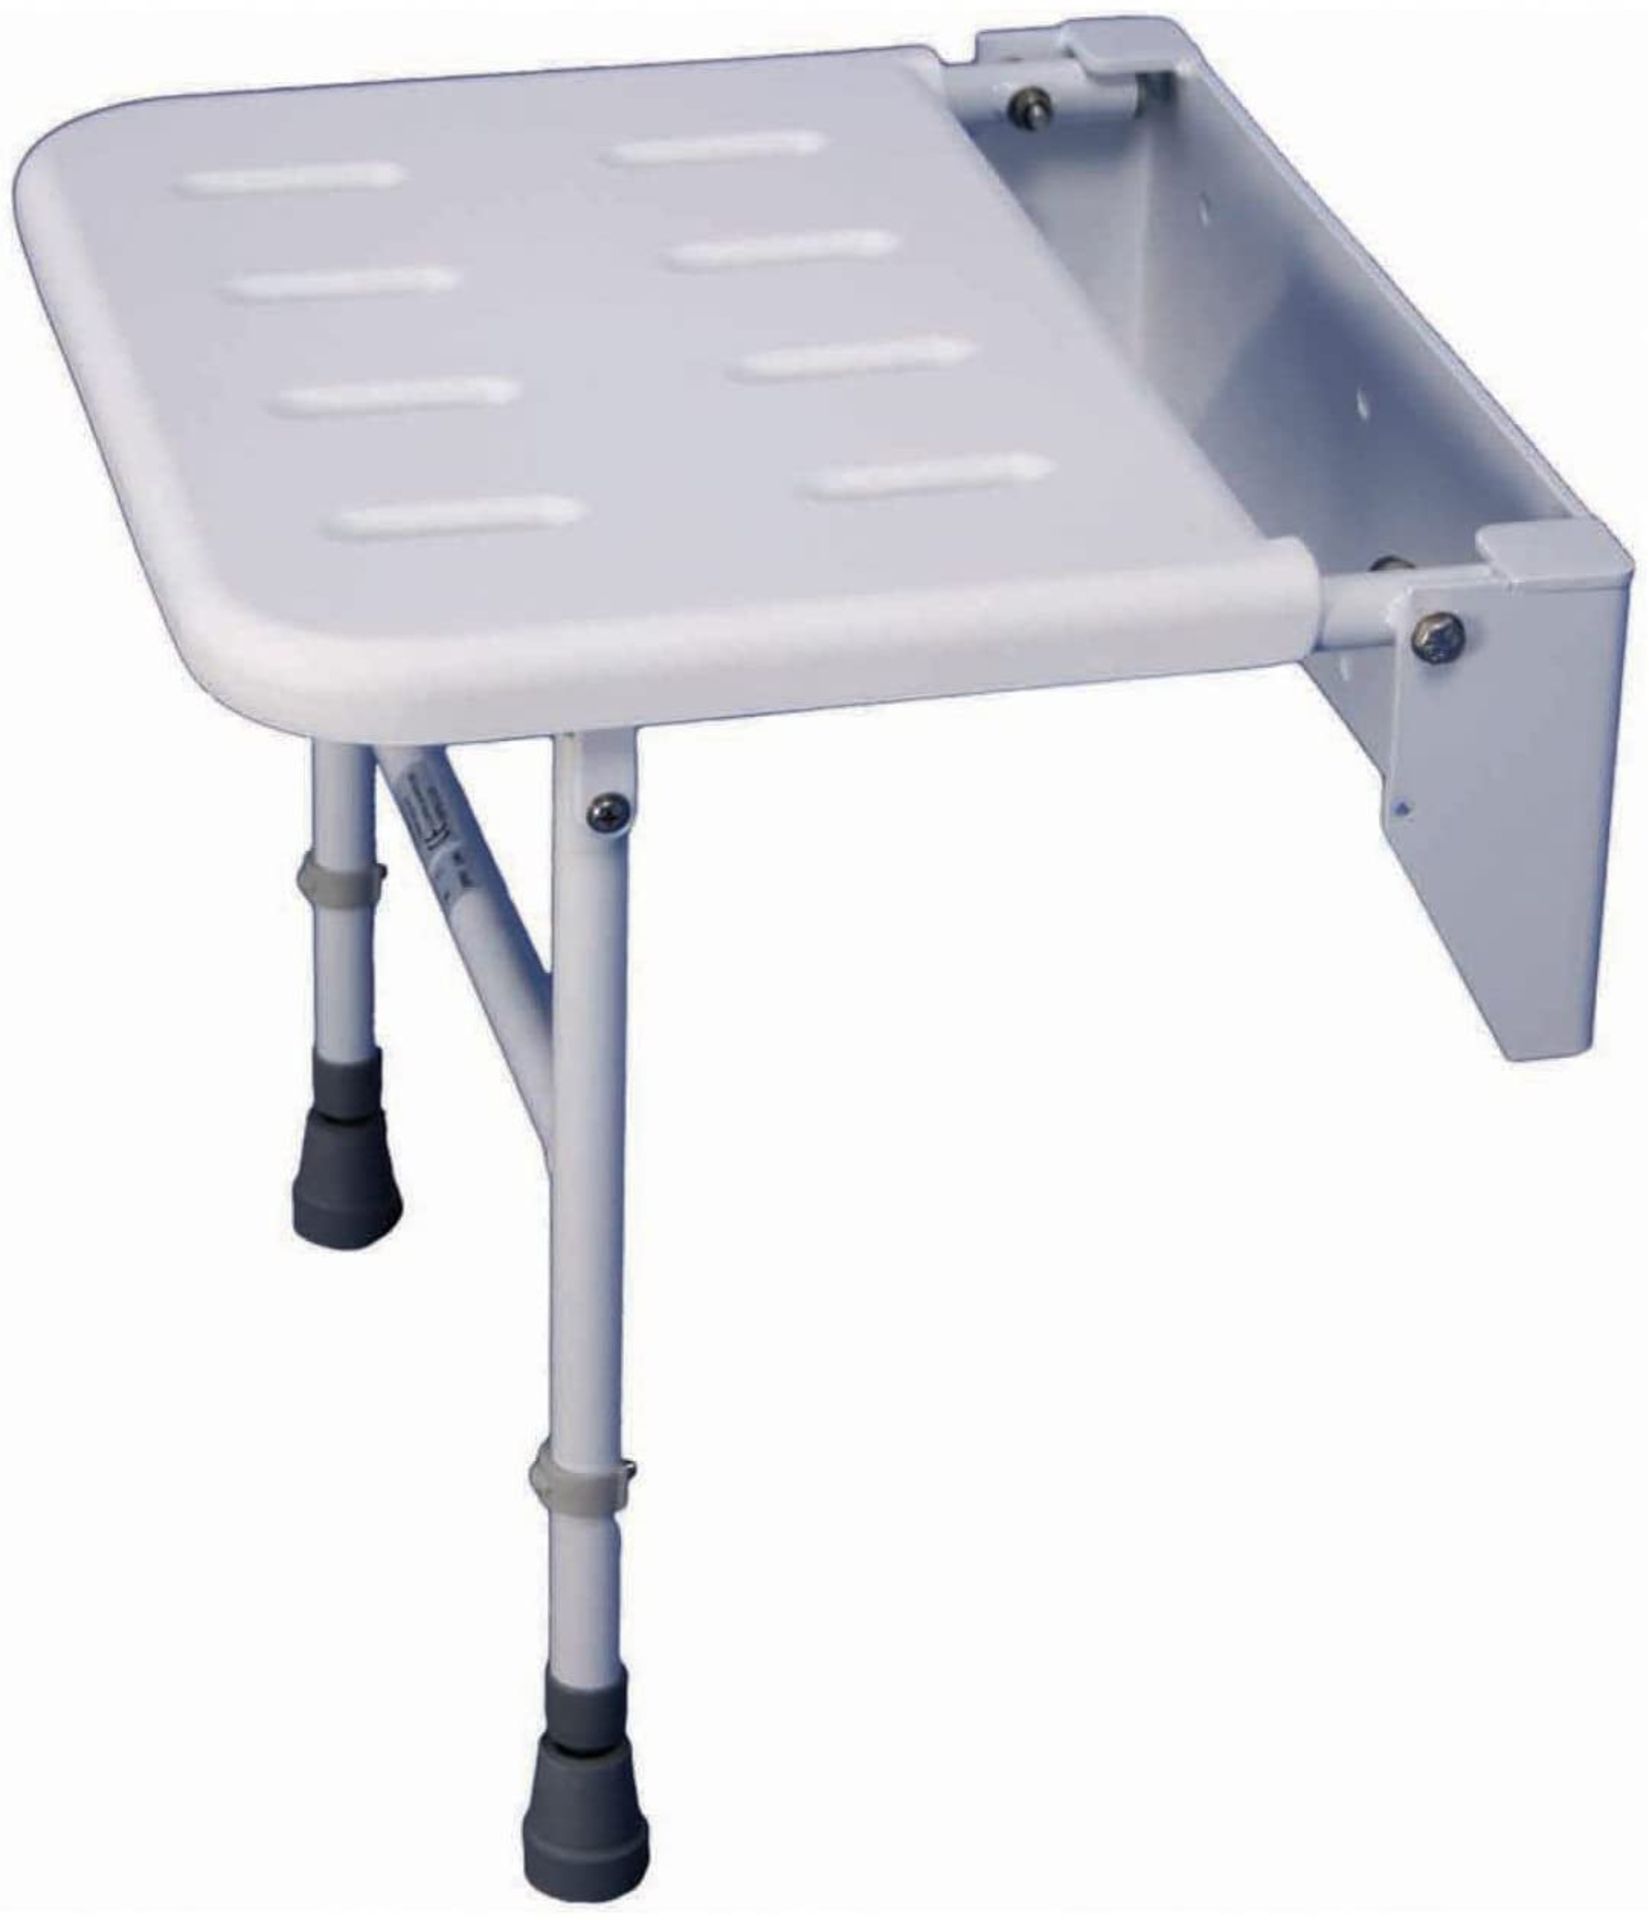 RRP £57 - Aidapt Standard Aluminium Shower Seat (Eligible for VAT relief in the UK)